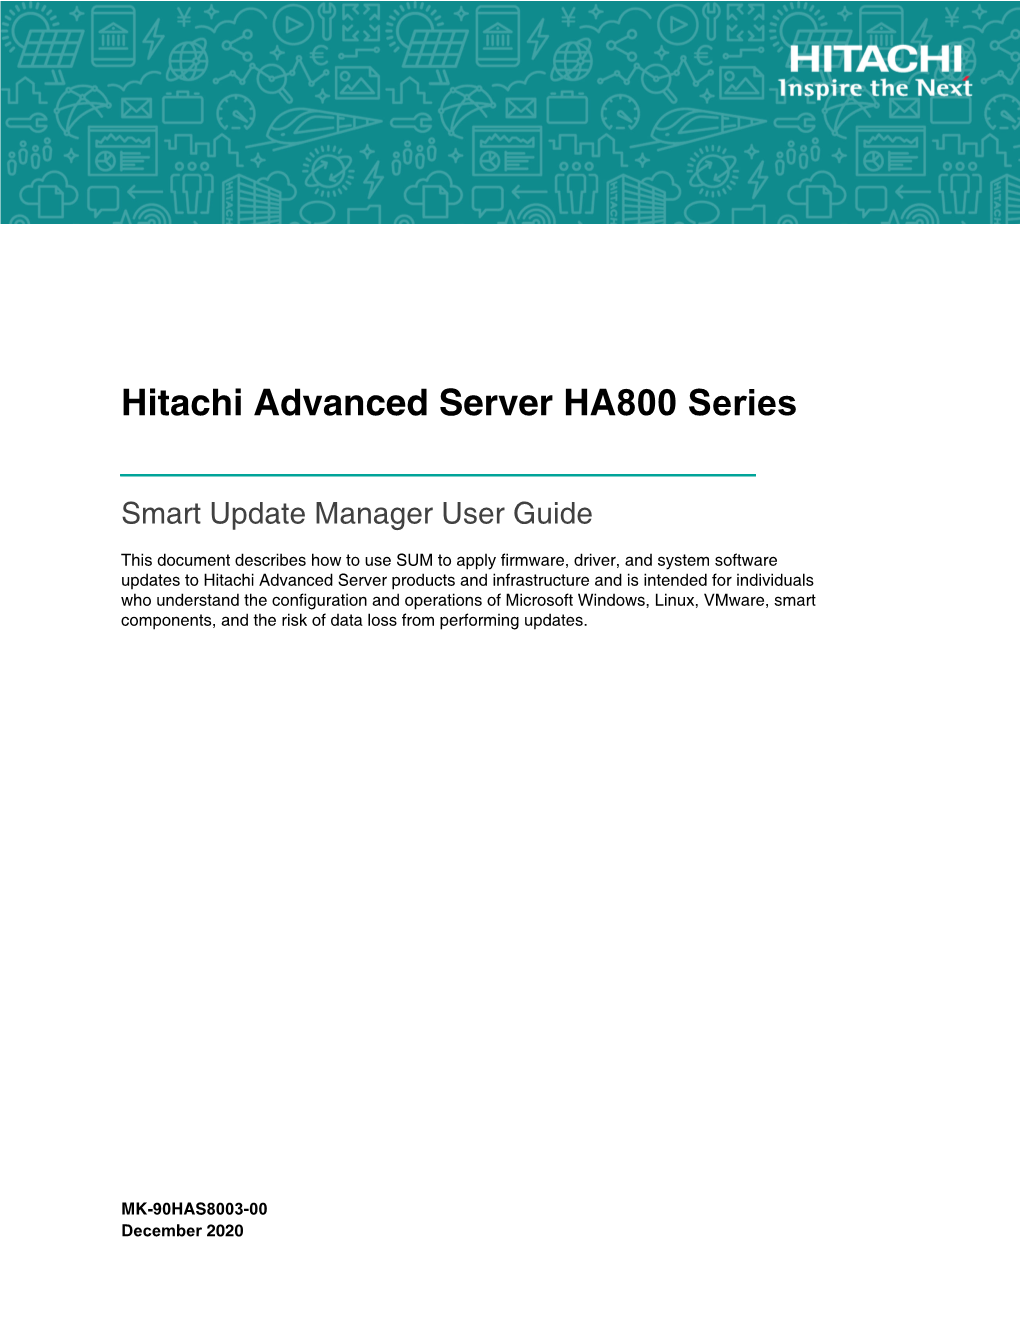 Hitachi Advanced Server HA800 Series Smart Update Manager